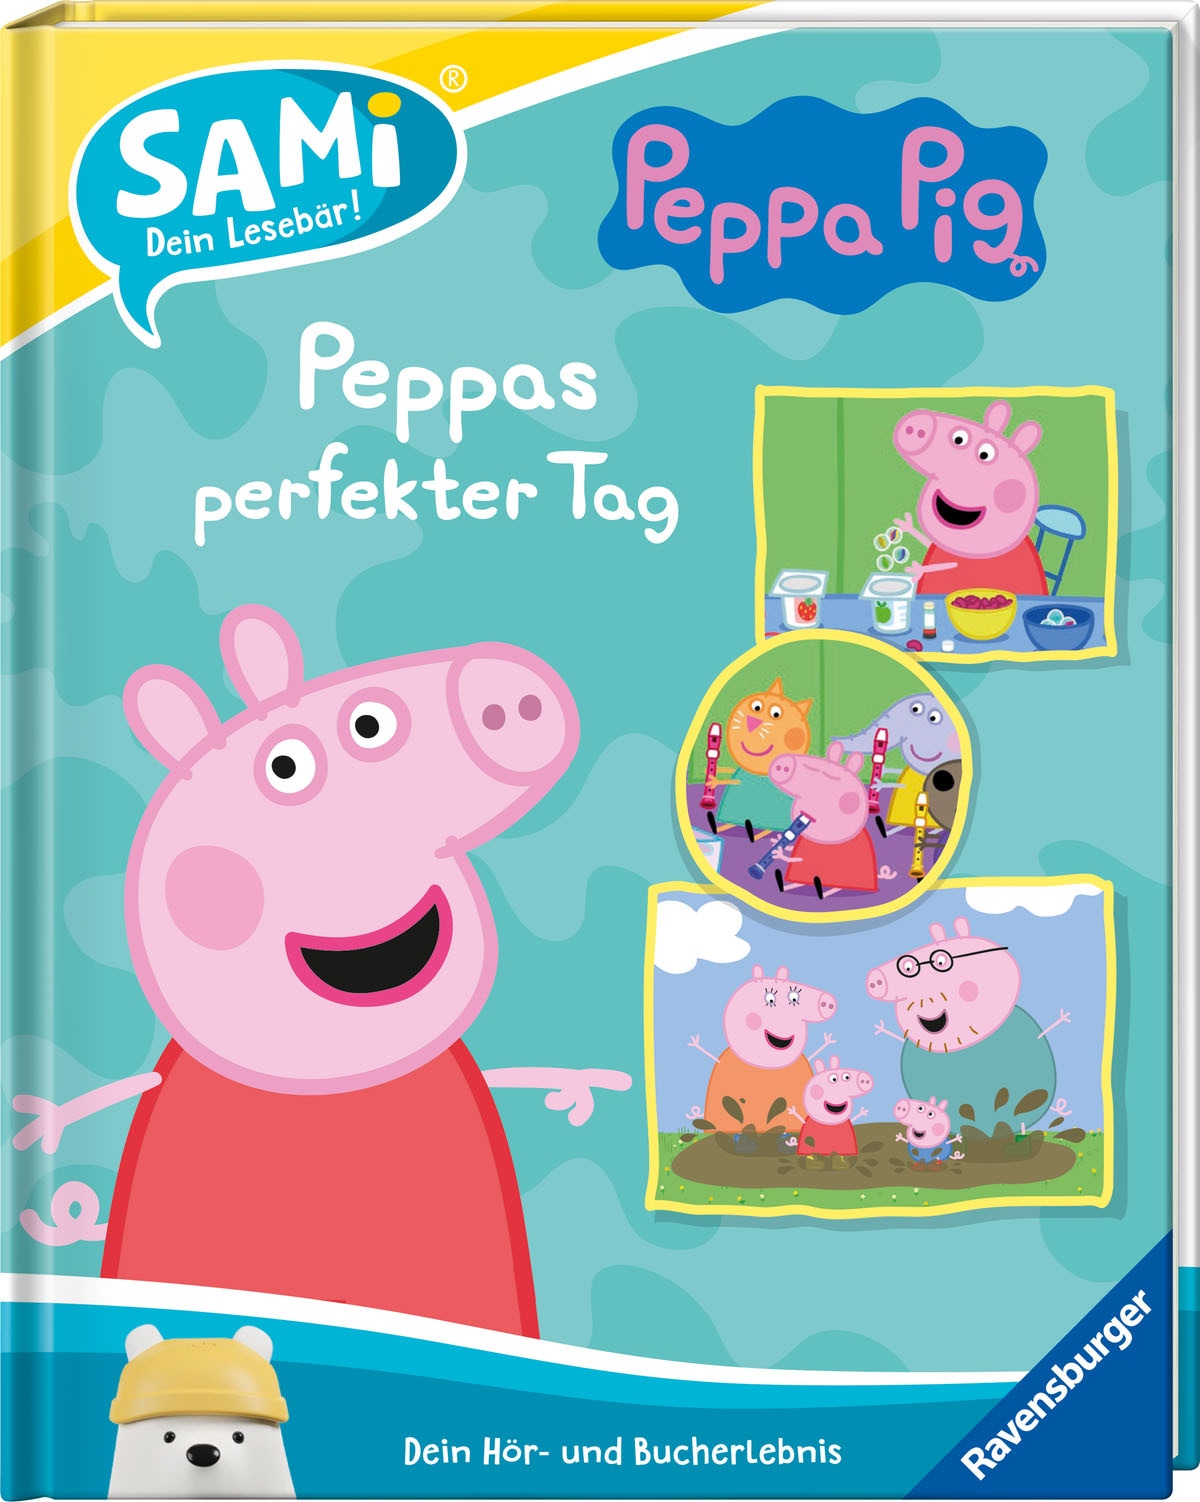 Ravensburger Buch "SAMi, Peppa Pig - Peppas perfekter Tag", Made in Germany, FSC - schützt Wald - weltweit